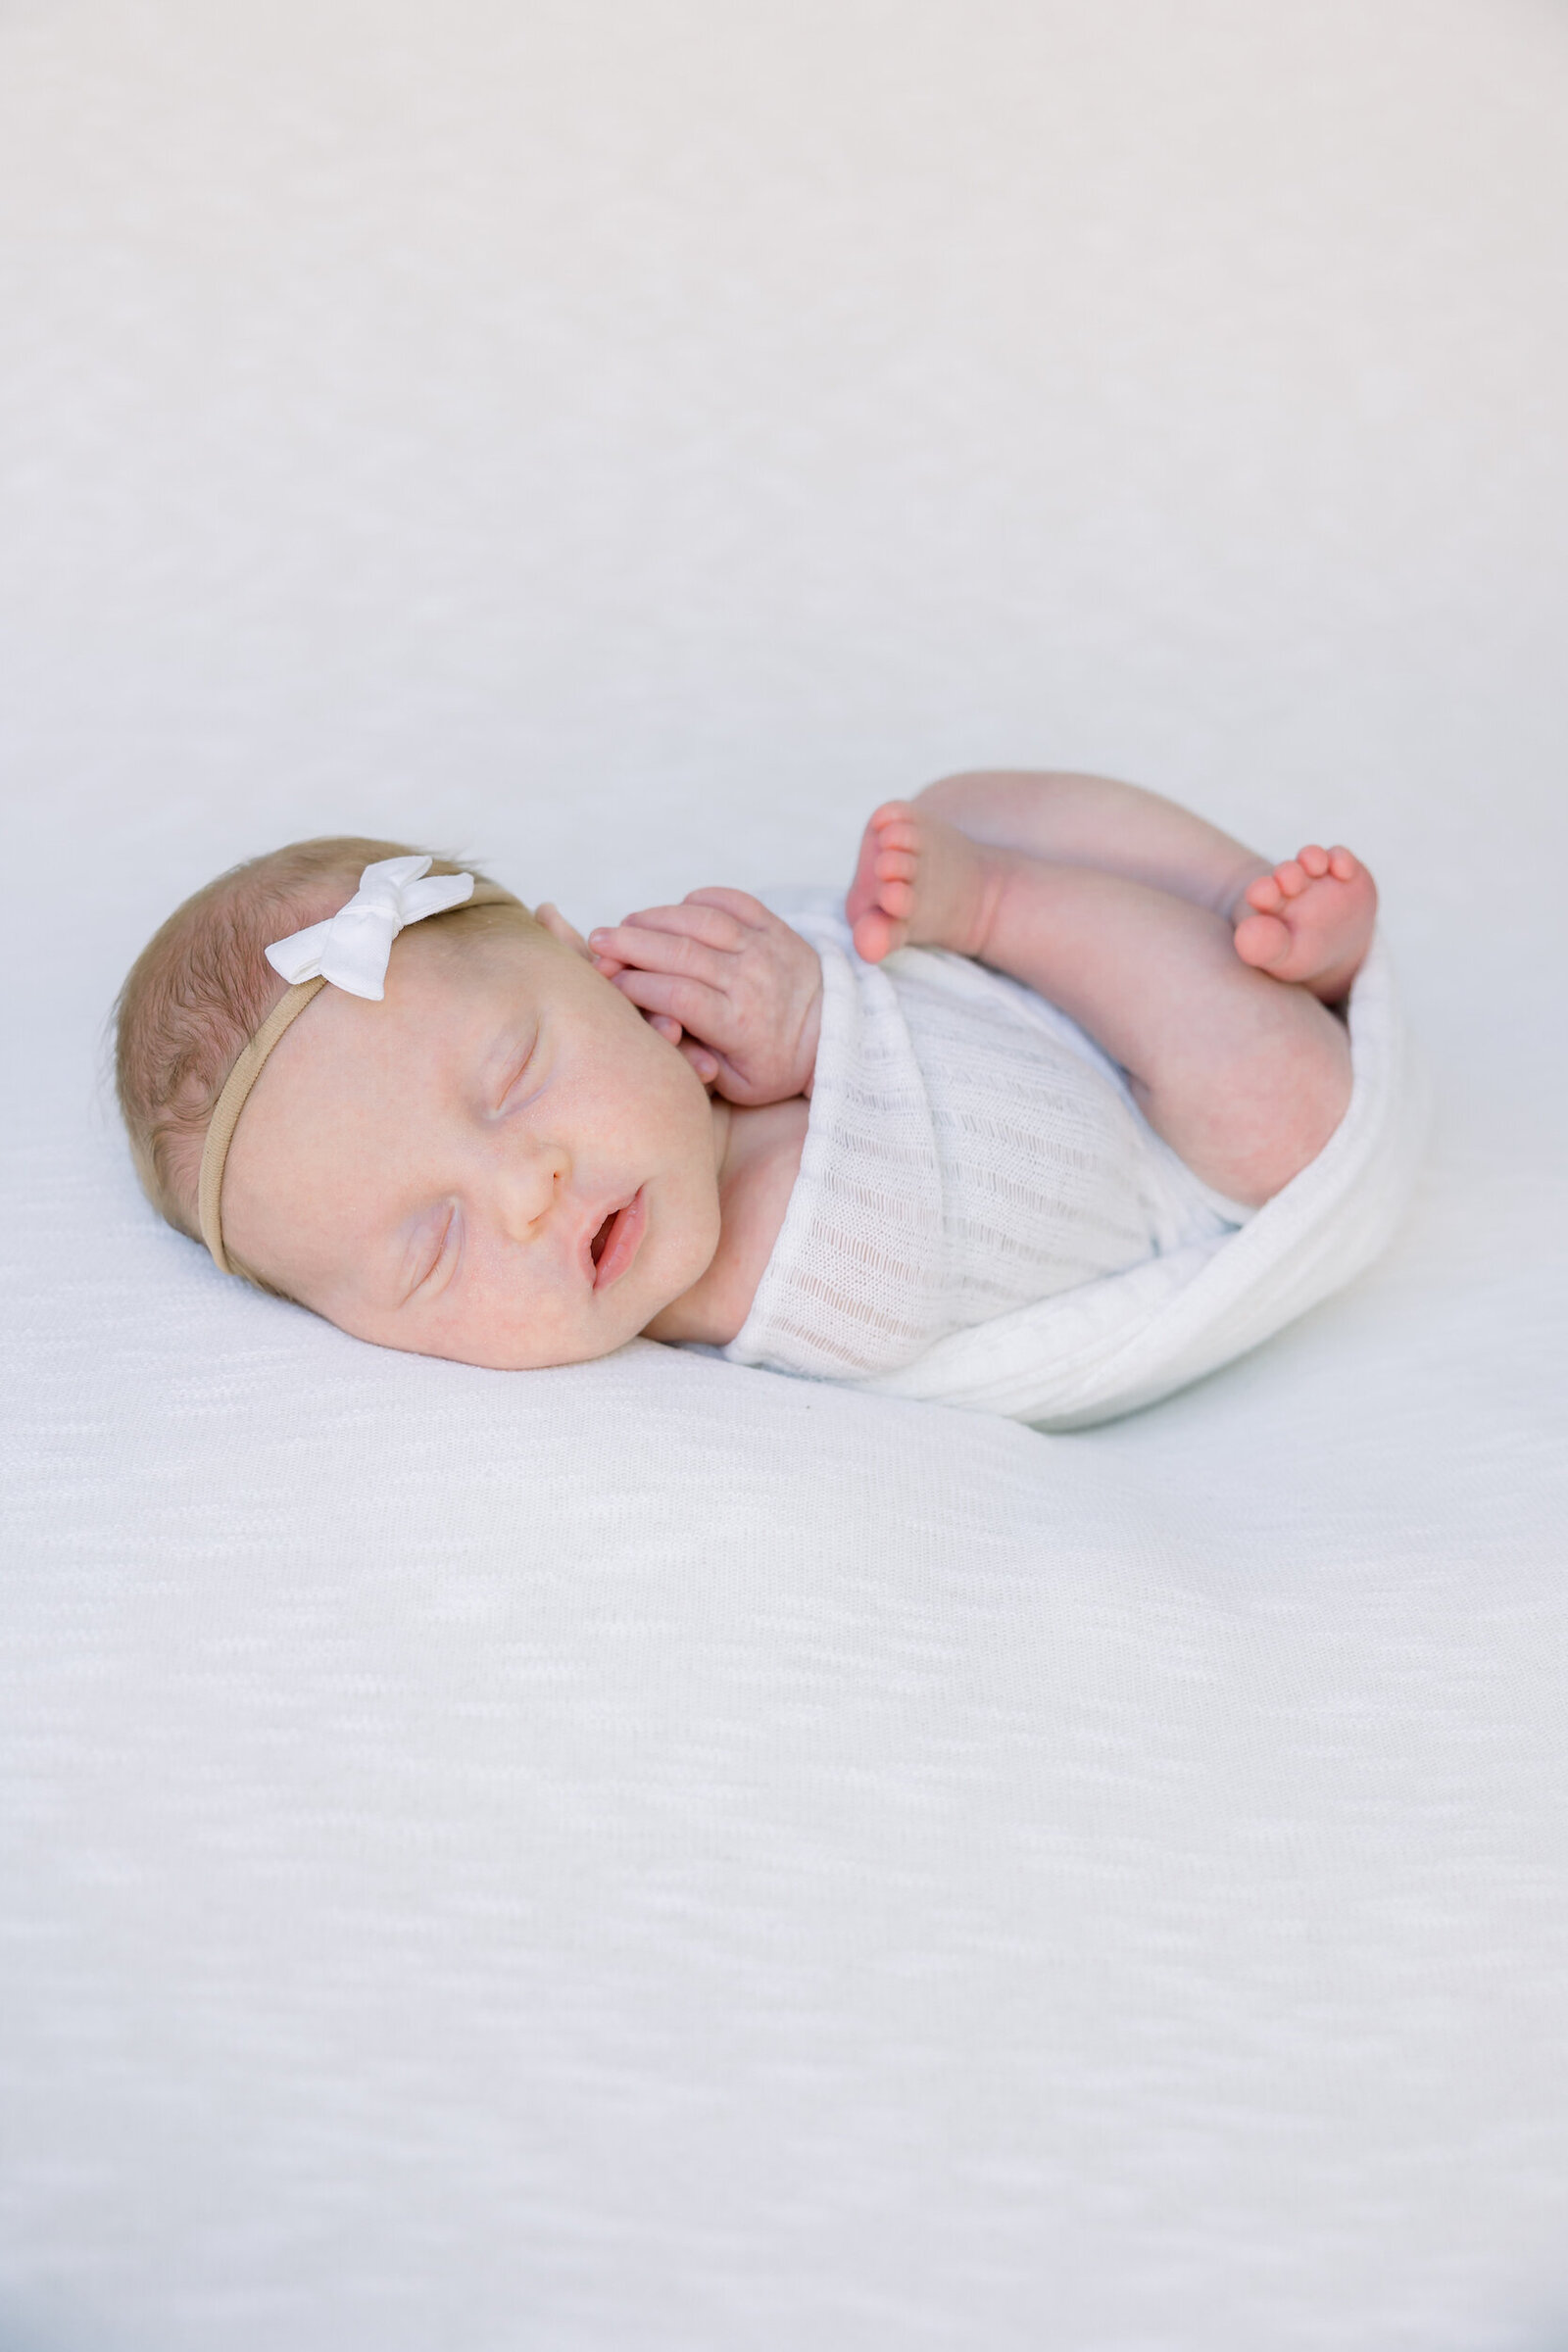 Scottsdale-In-Home-Newborn-Photography-Brenna-Heater92